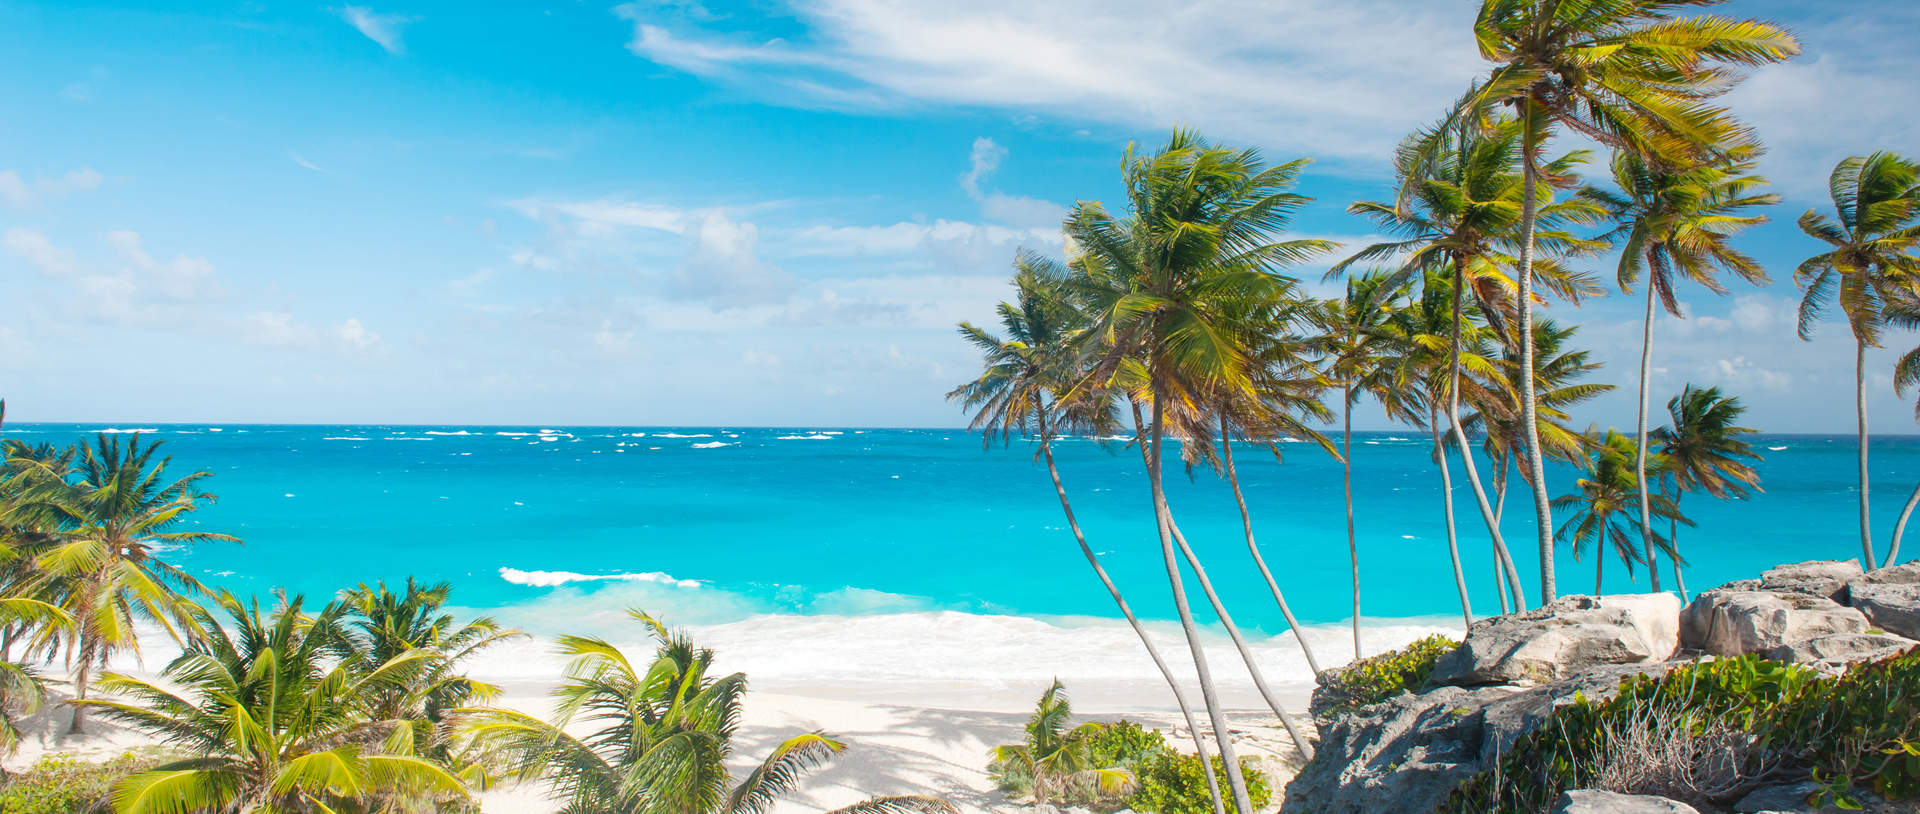 Bottom Bay Beach Framed With Palm Trees Barbados